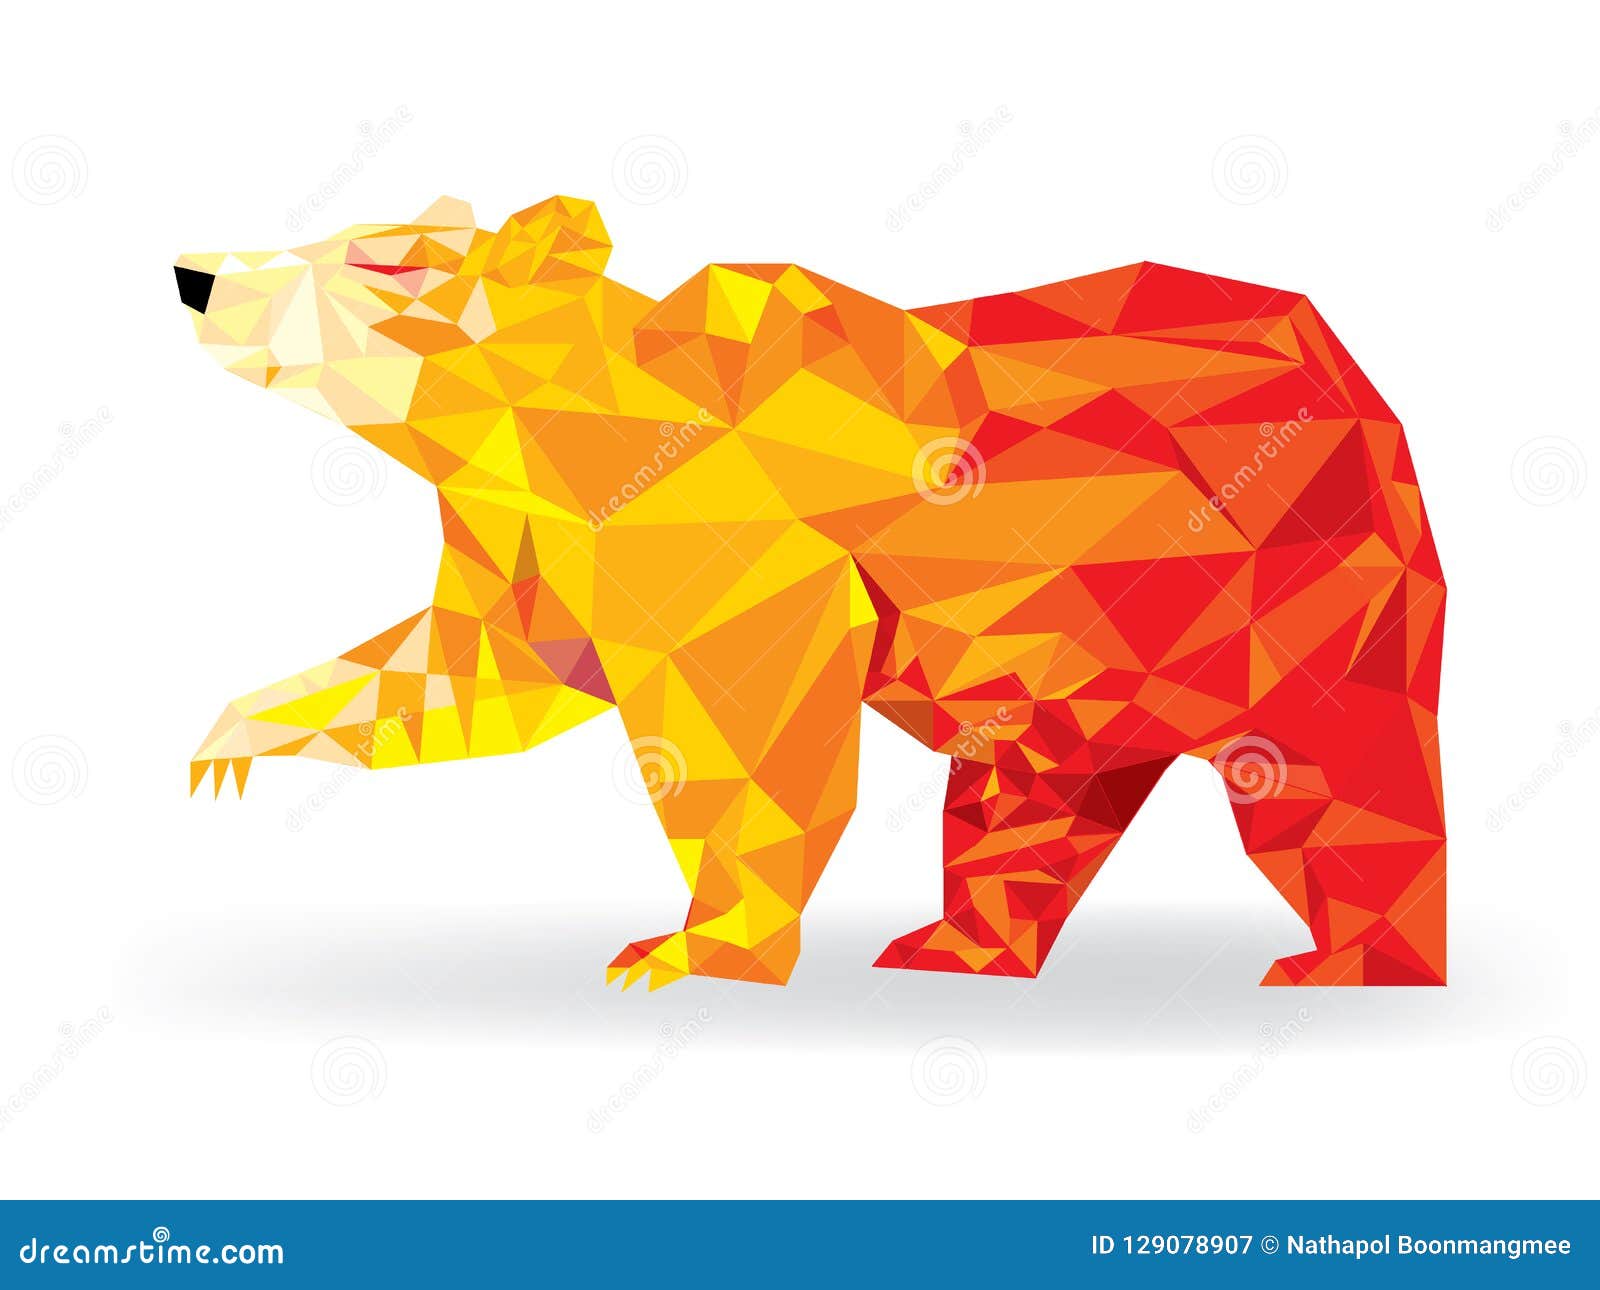 grizzly bear in geomeyric pattern low polygon bearish trend, te